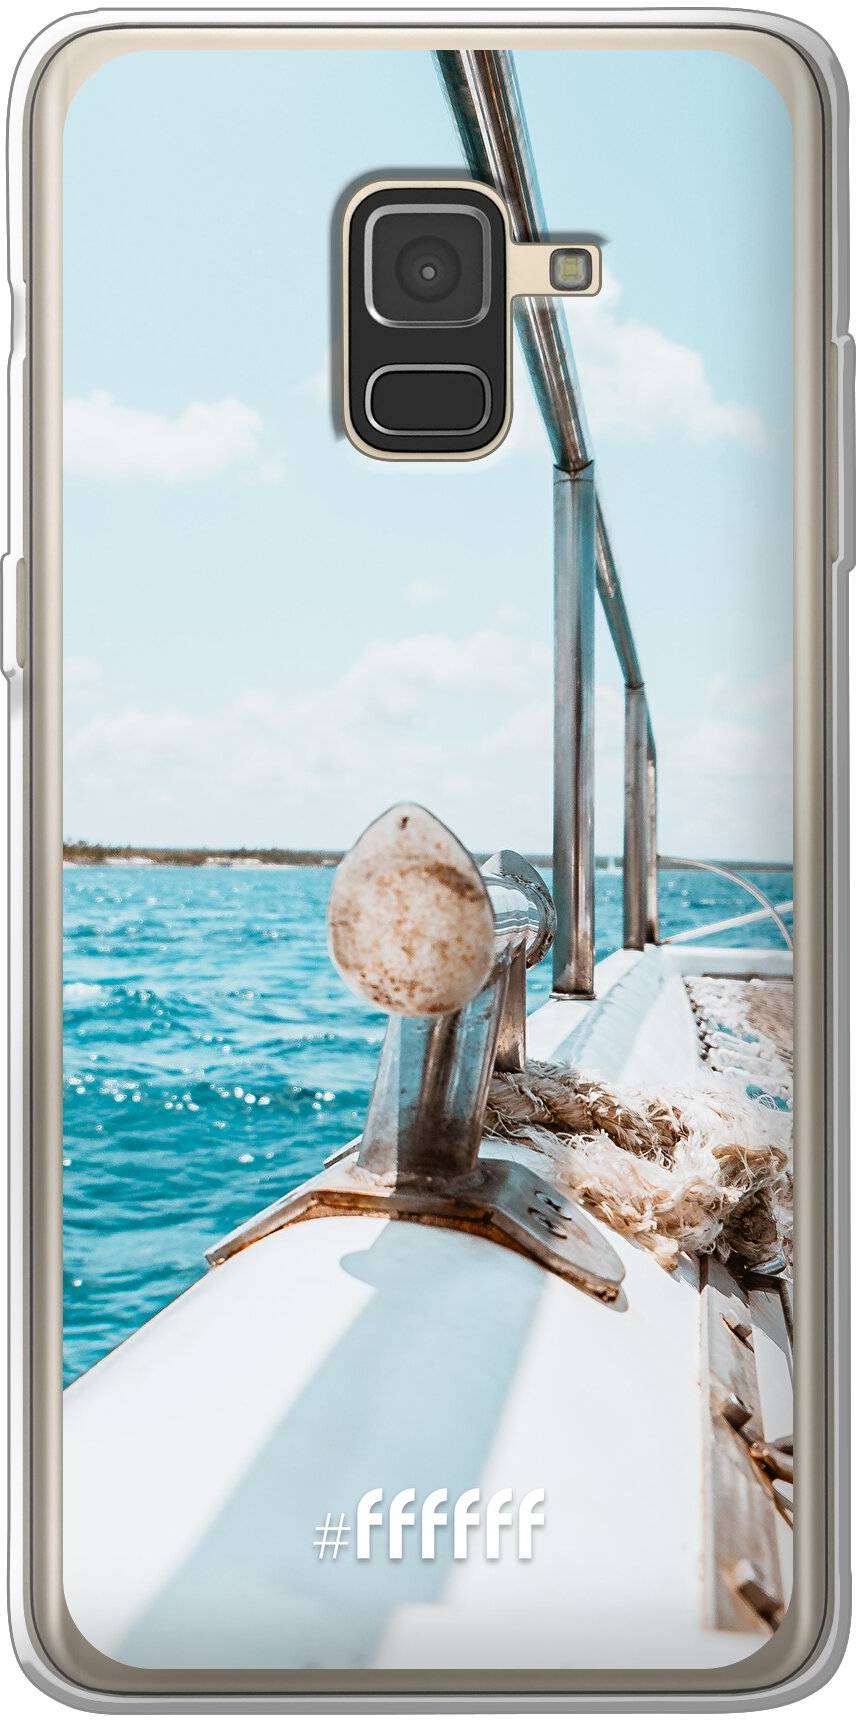 Sailing Galaxy A8 (2018)